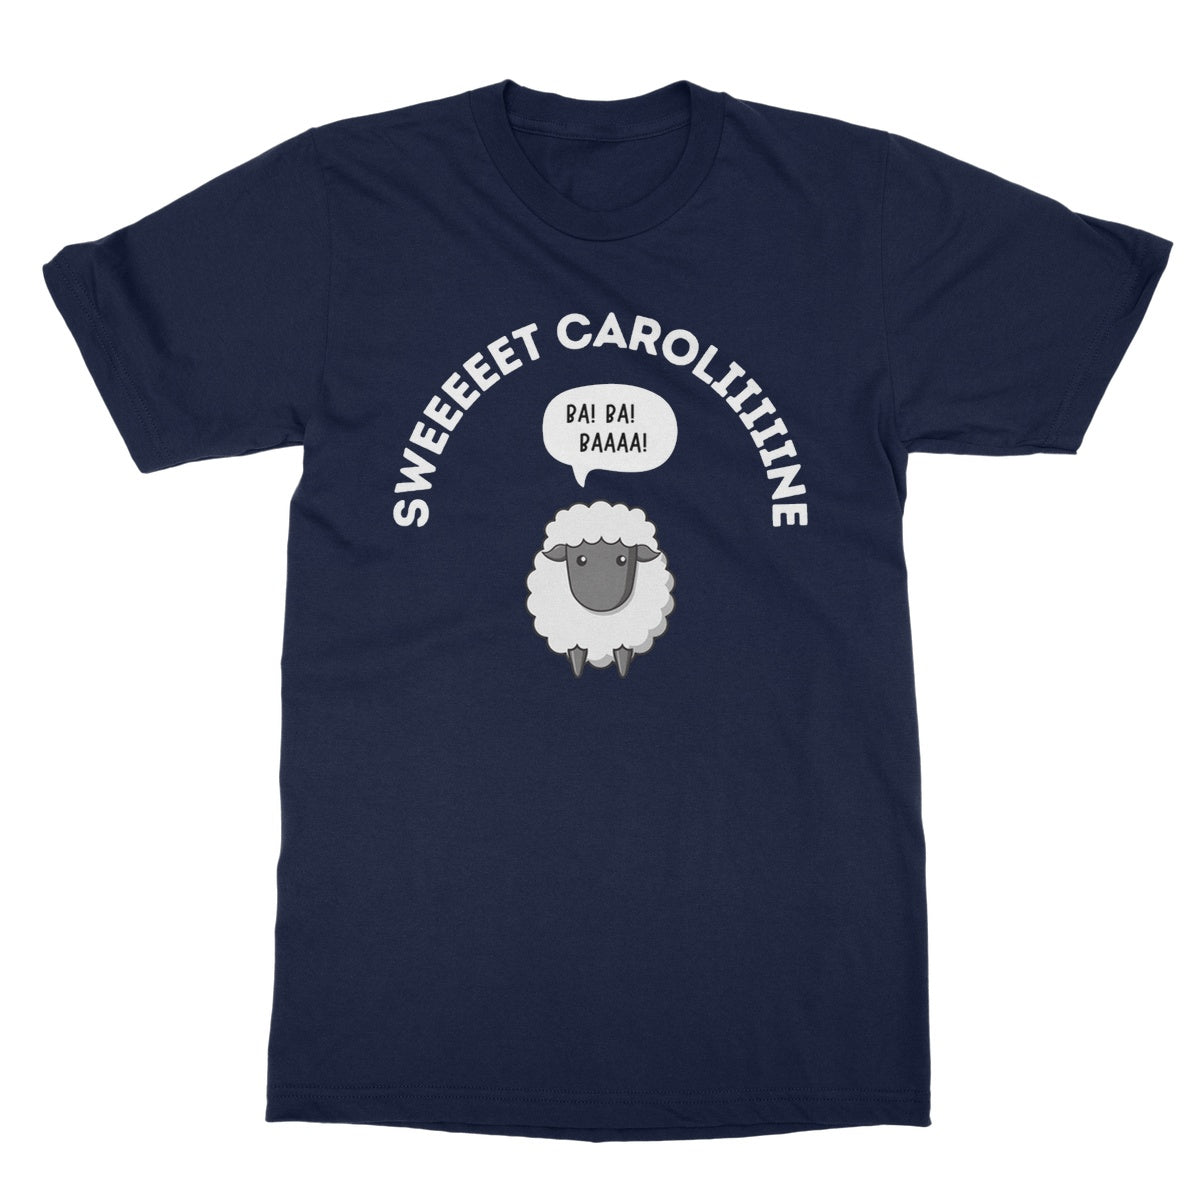 sweet caroline t shirt navy